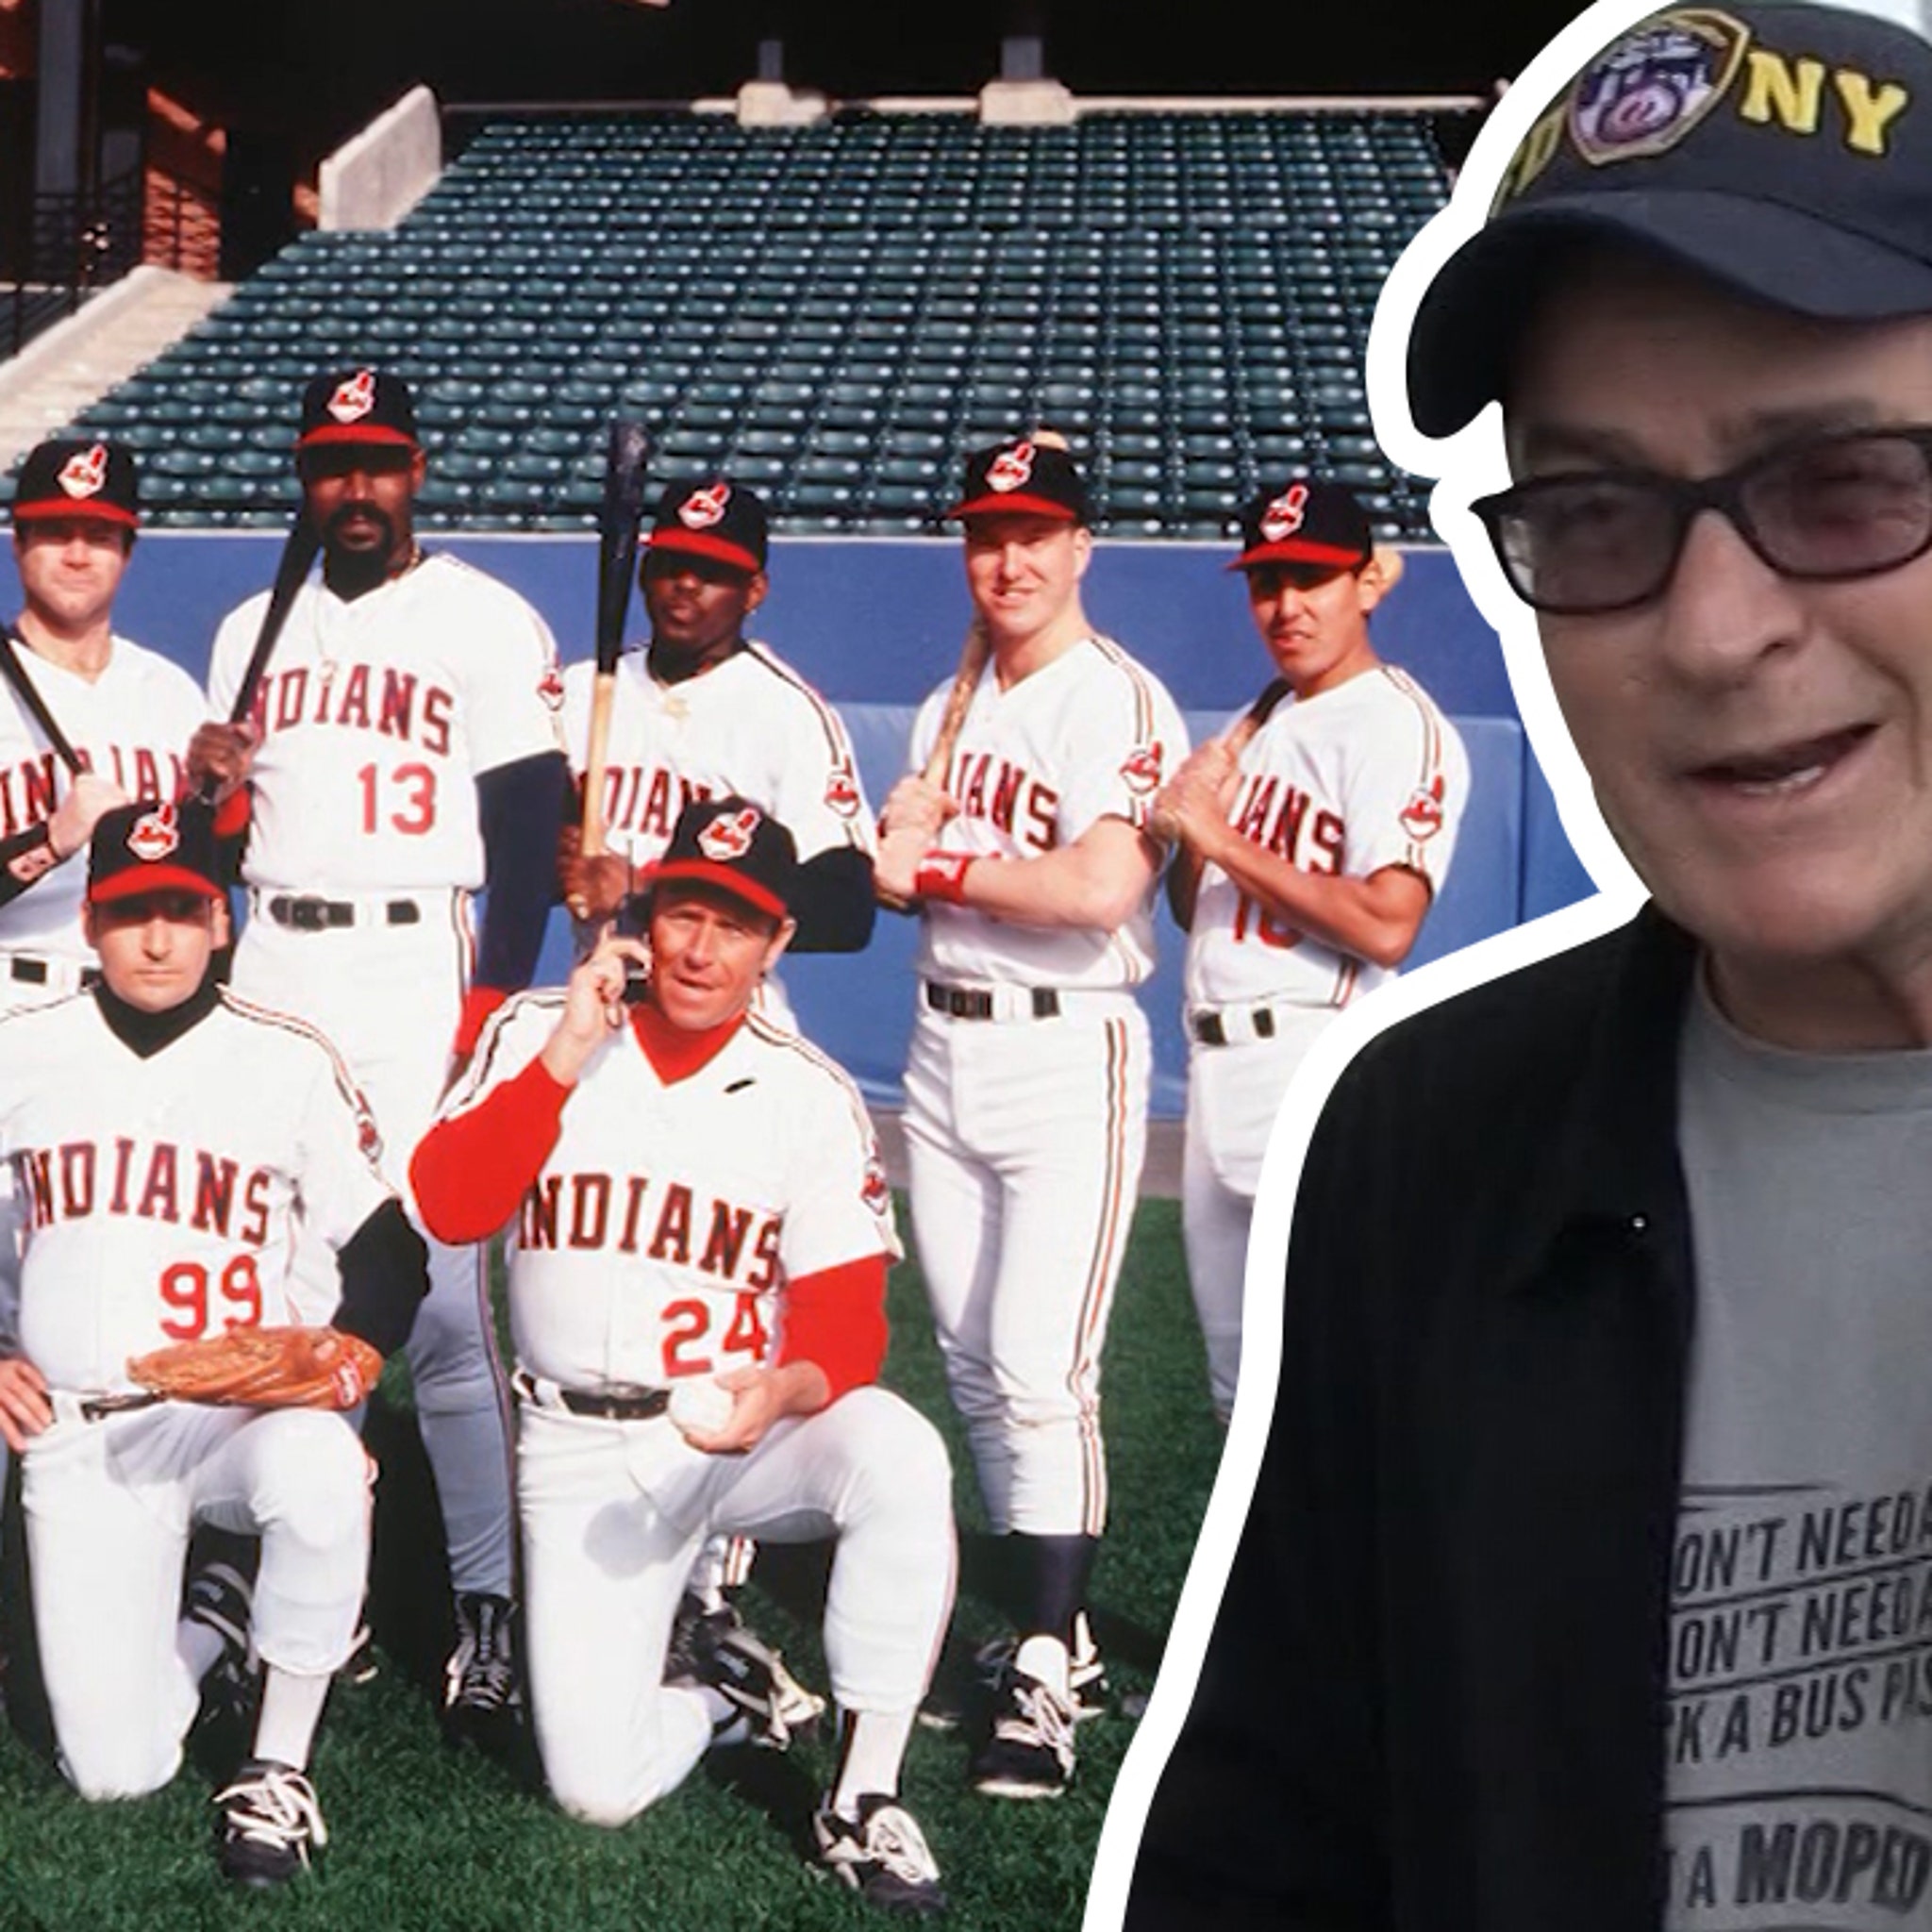 Major League 3' could happen: Original cast is on board, Charlie Sheen says  